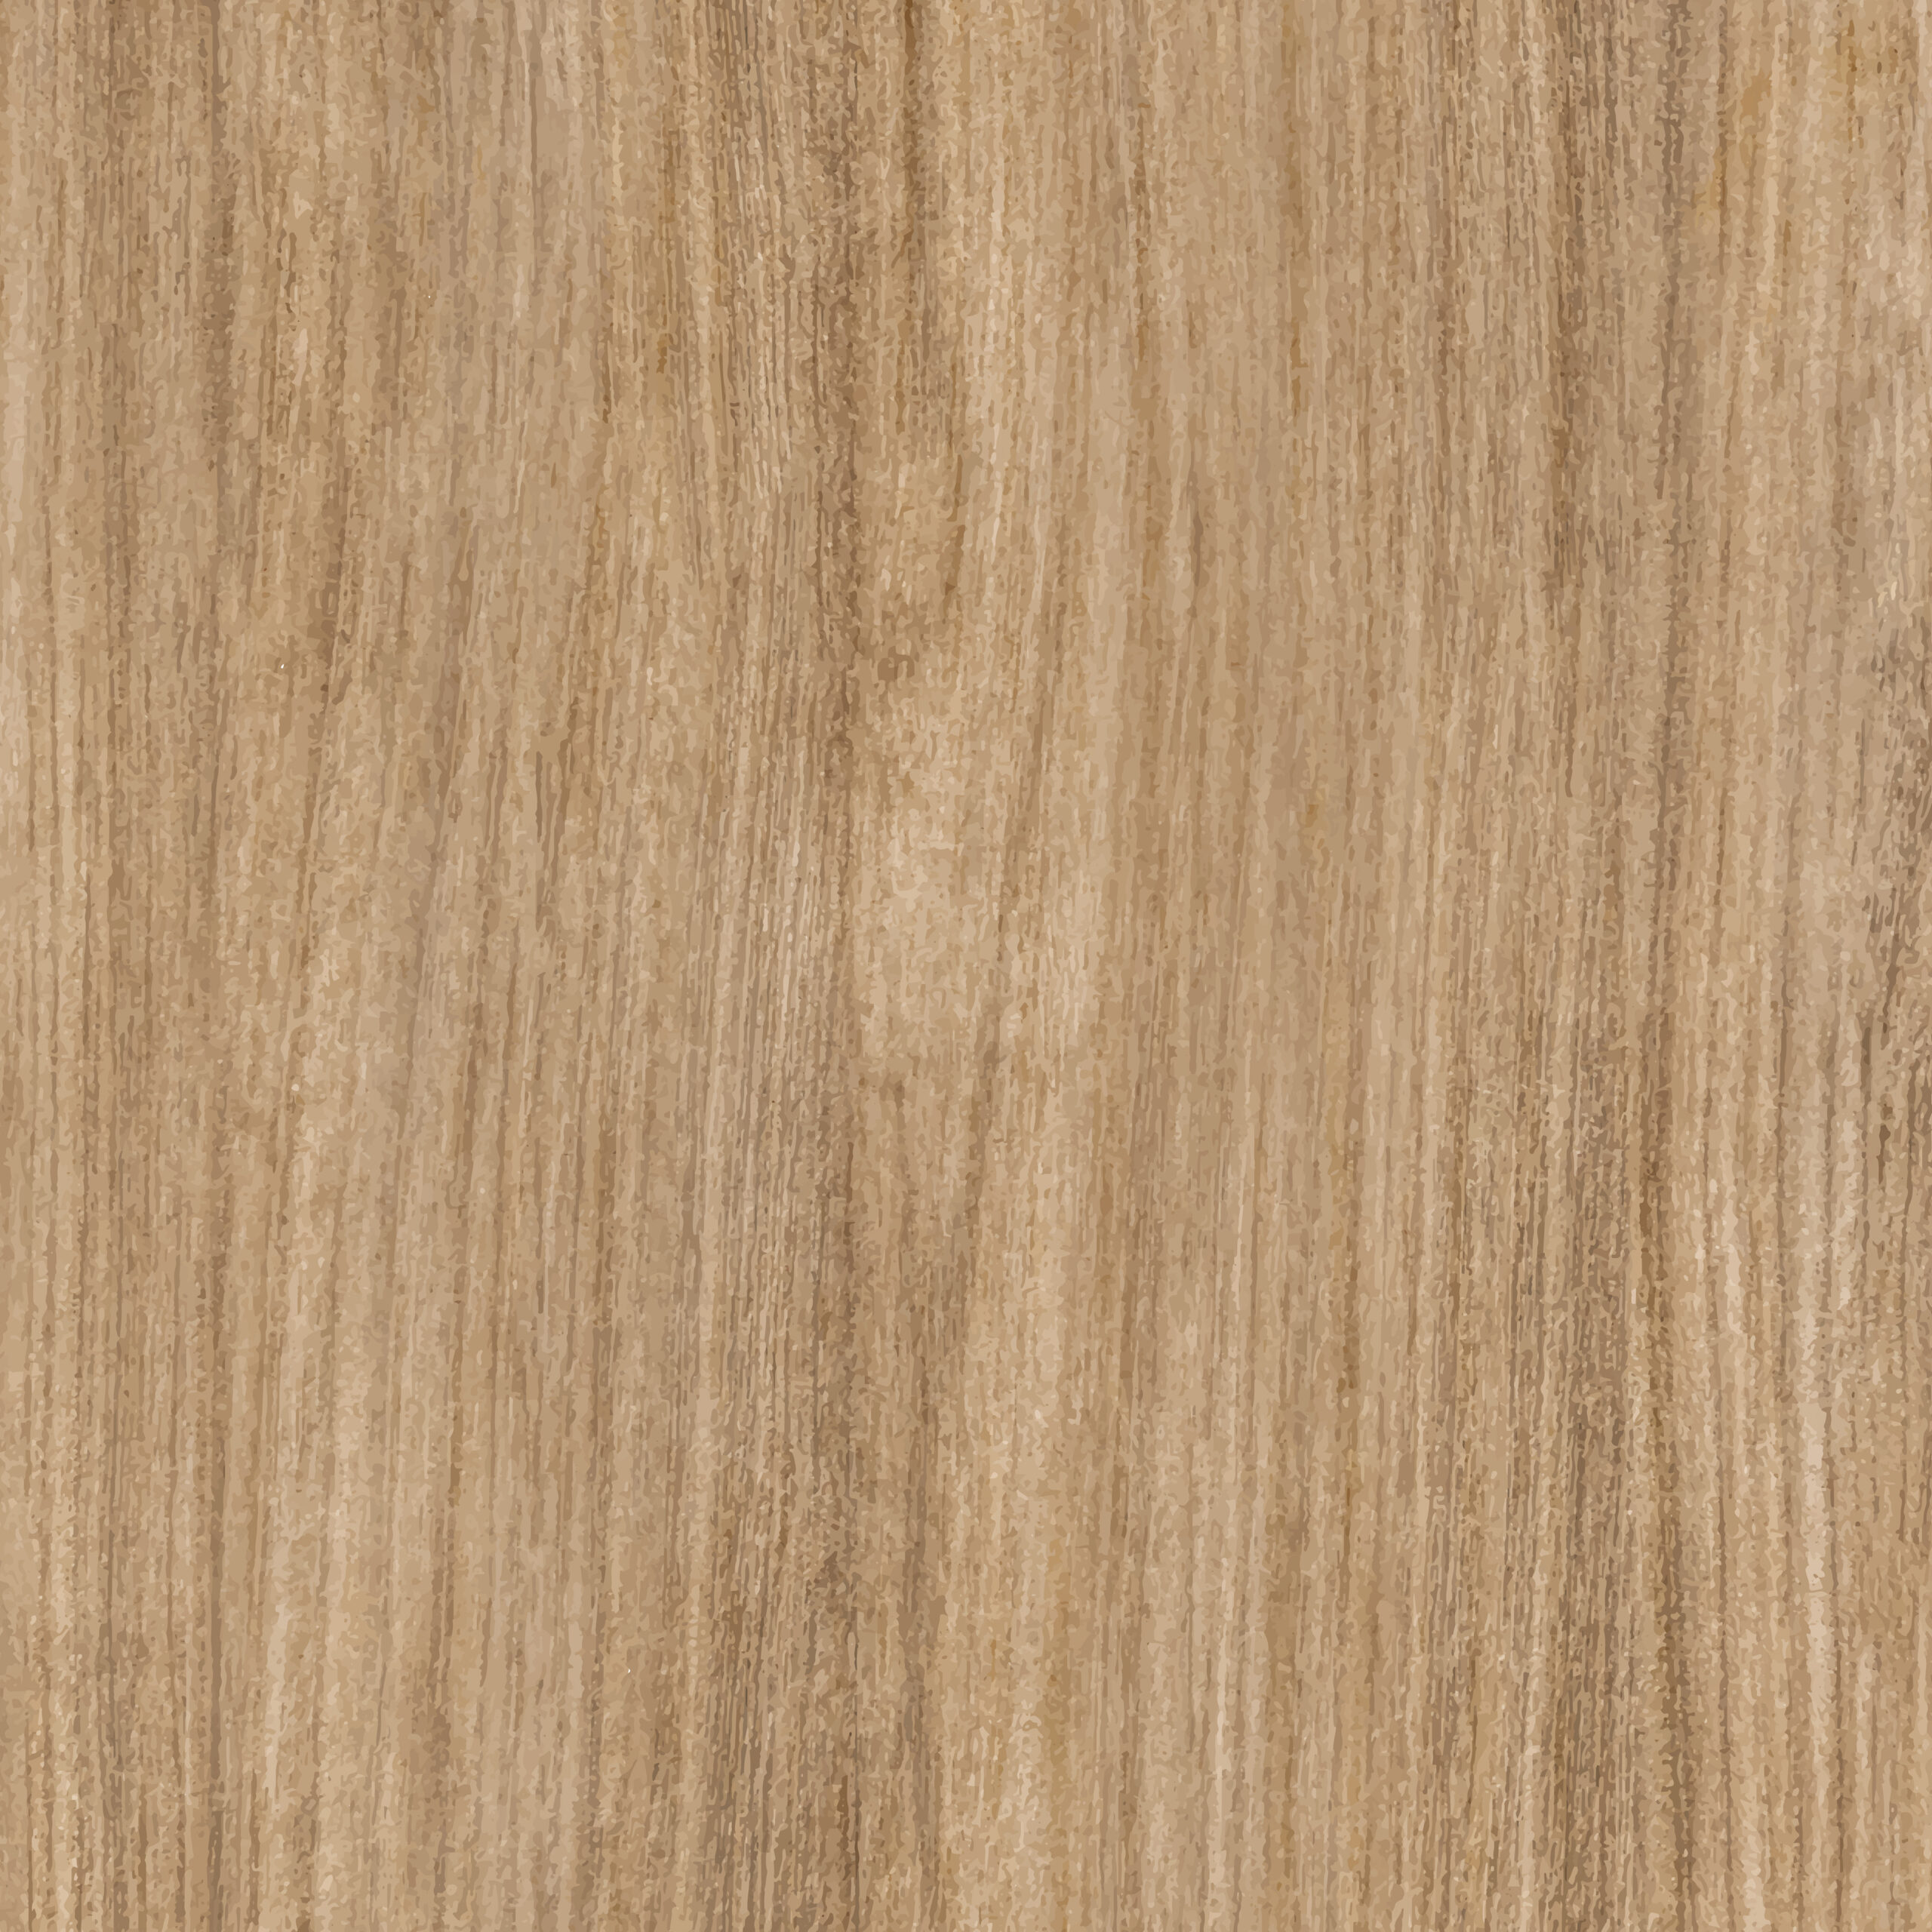 Oak wood texture